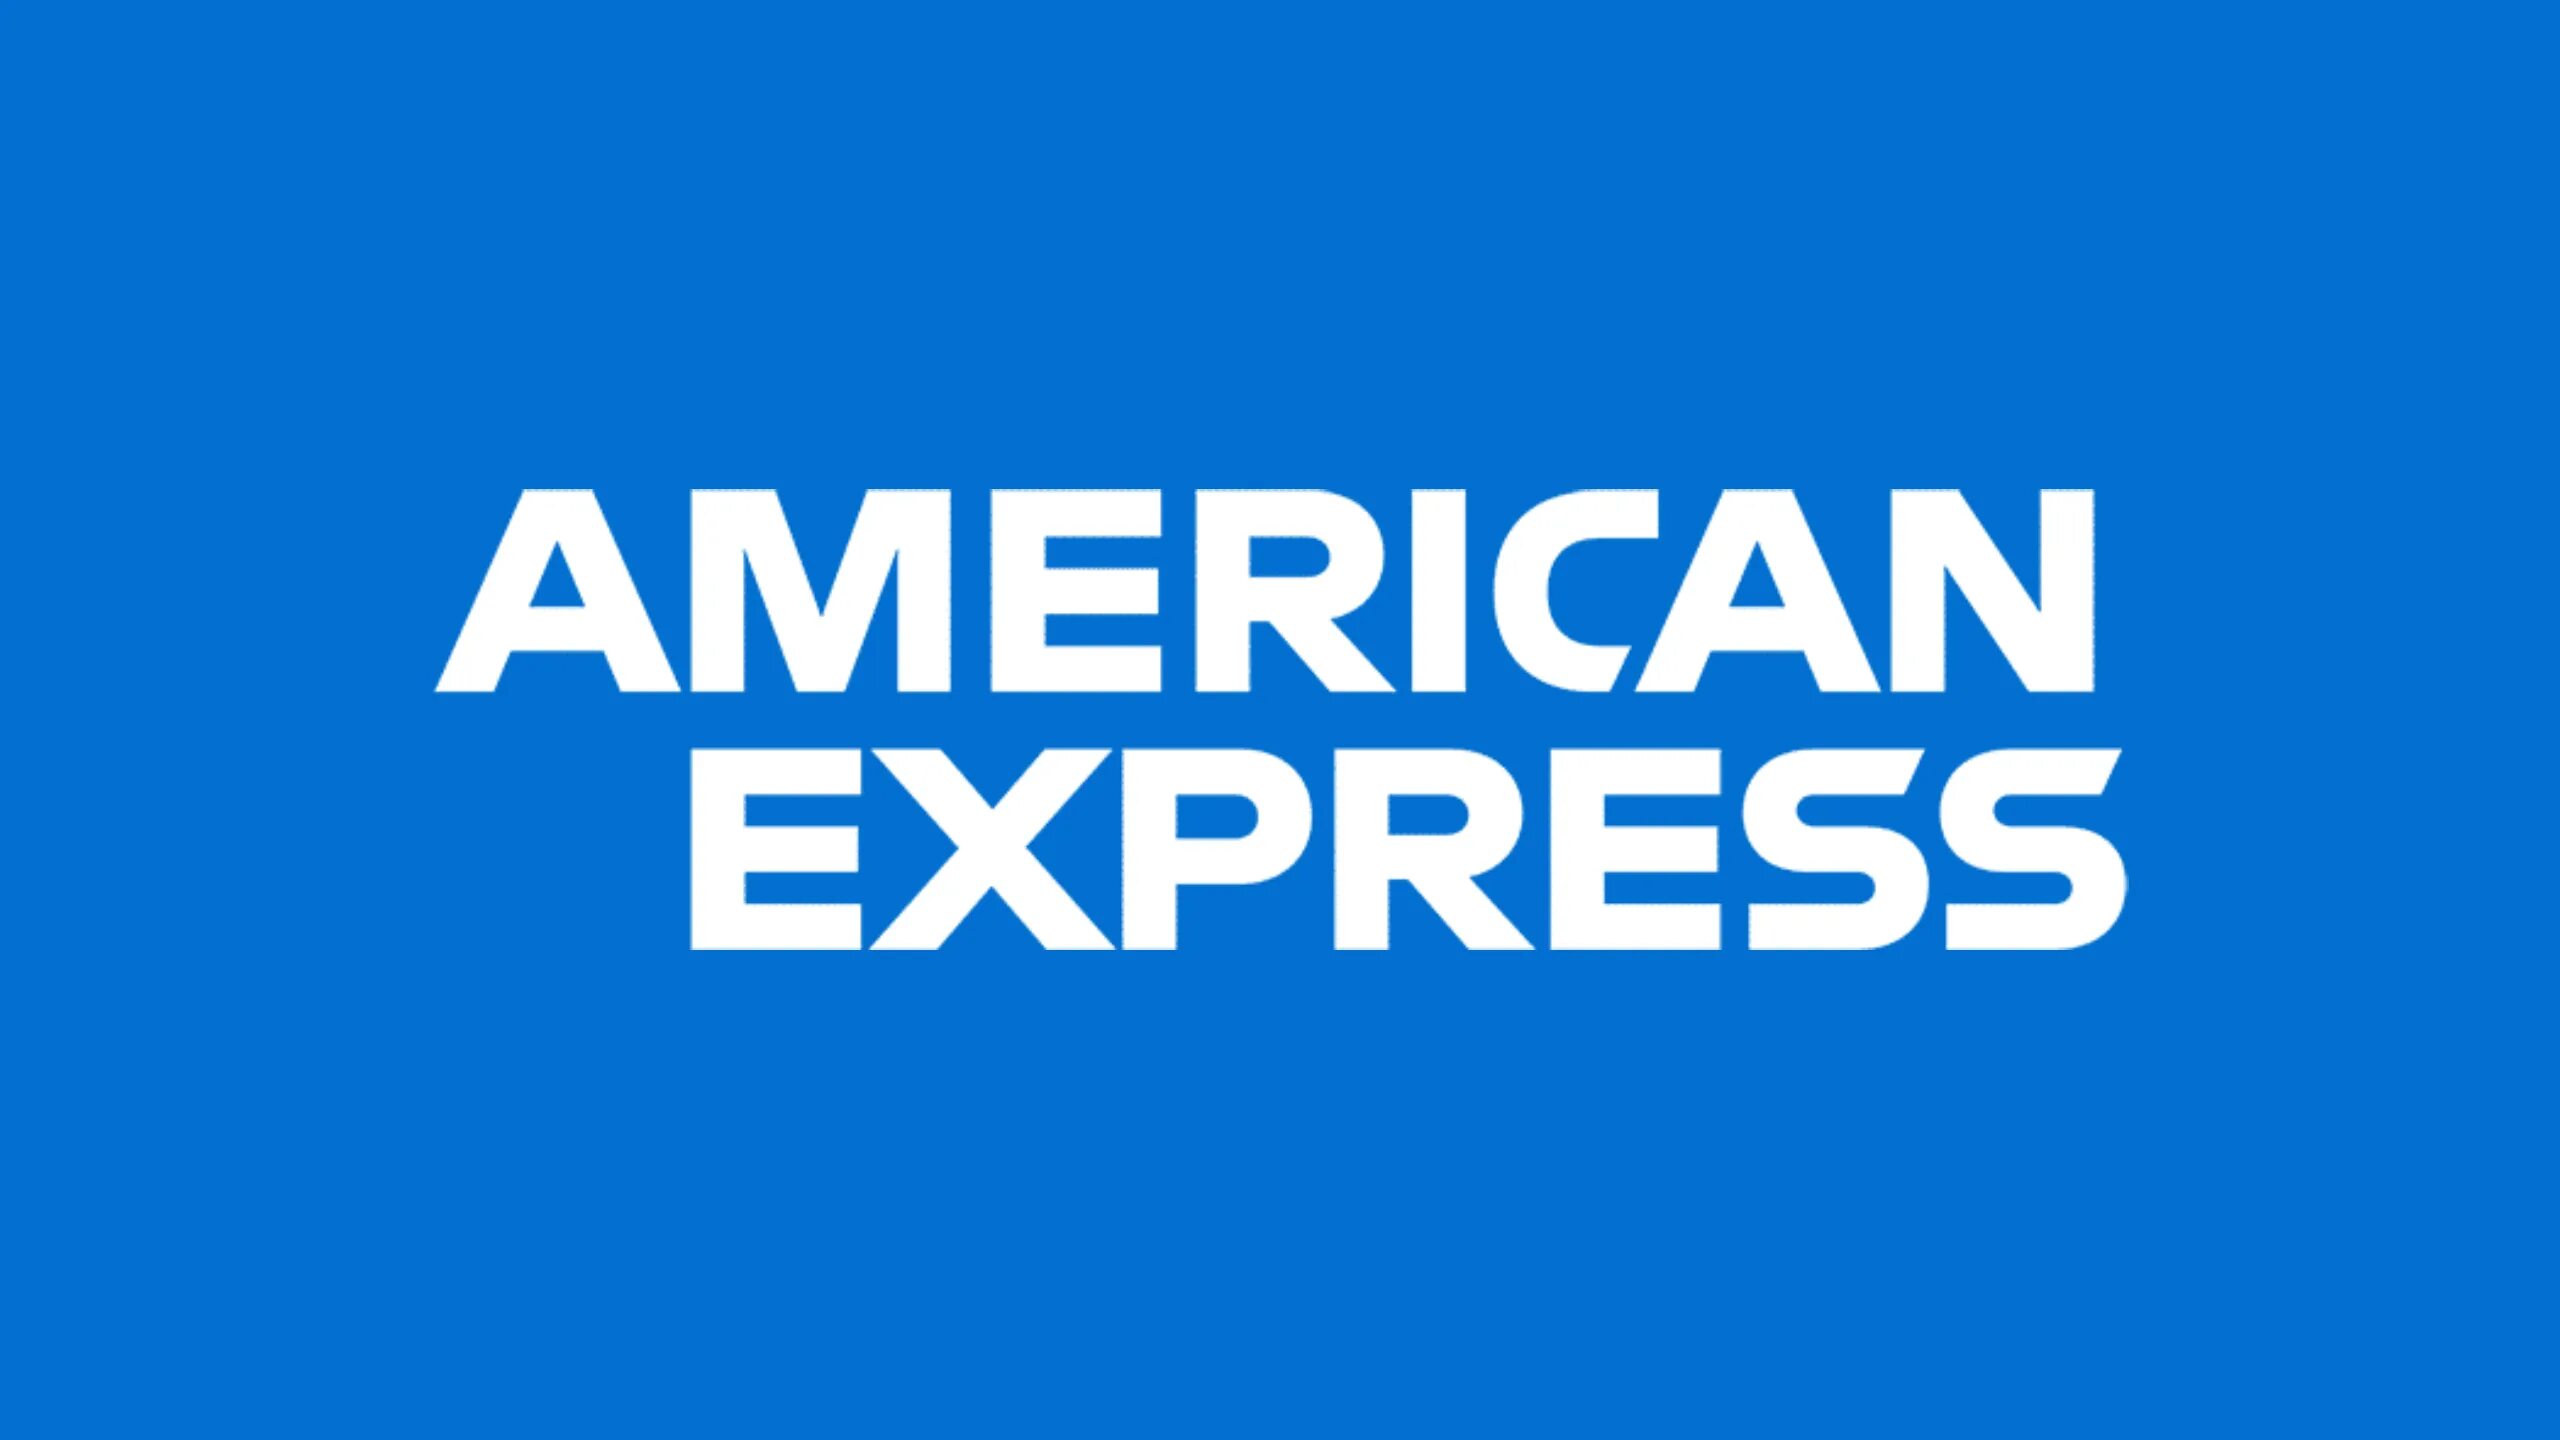 T me brand american express. Американ экспресс. Логотип Amex. Эмблема American Express. American Express платежная система логотип.